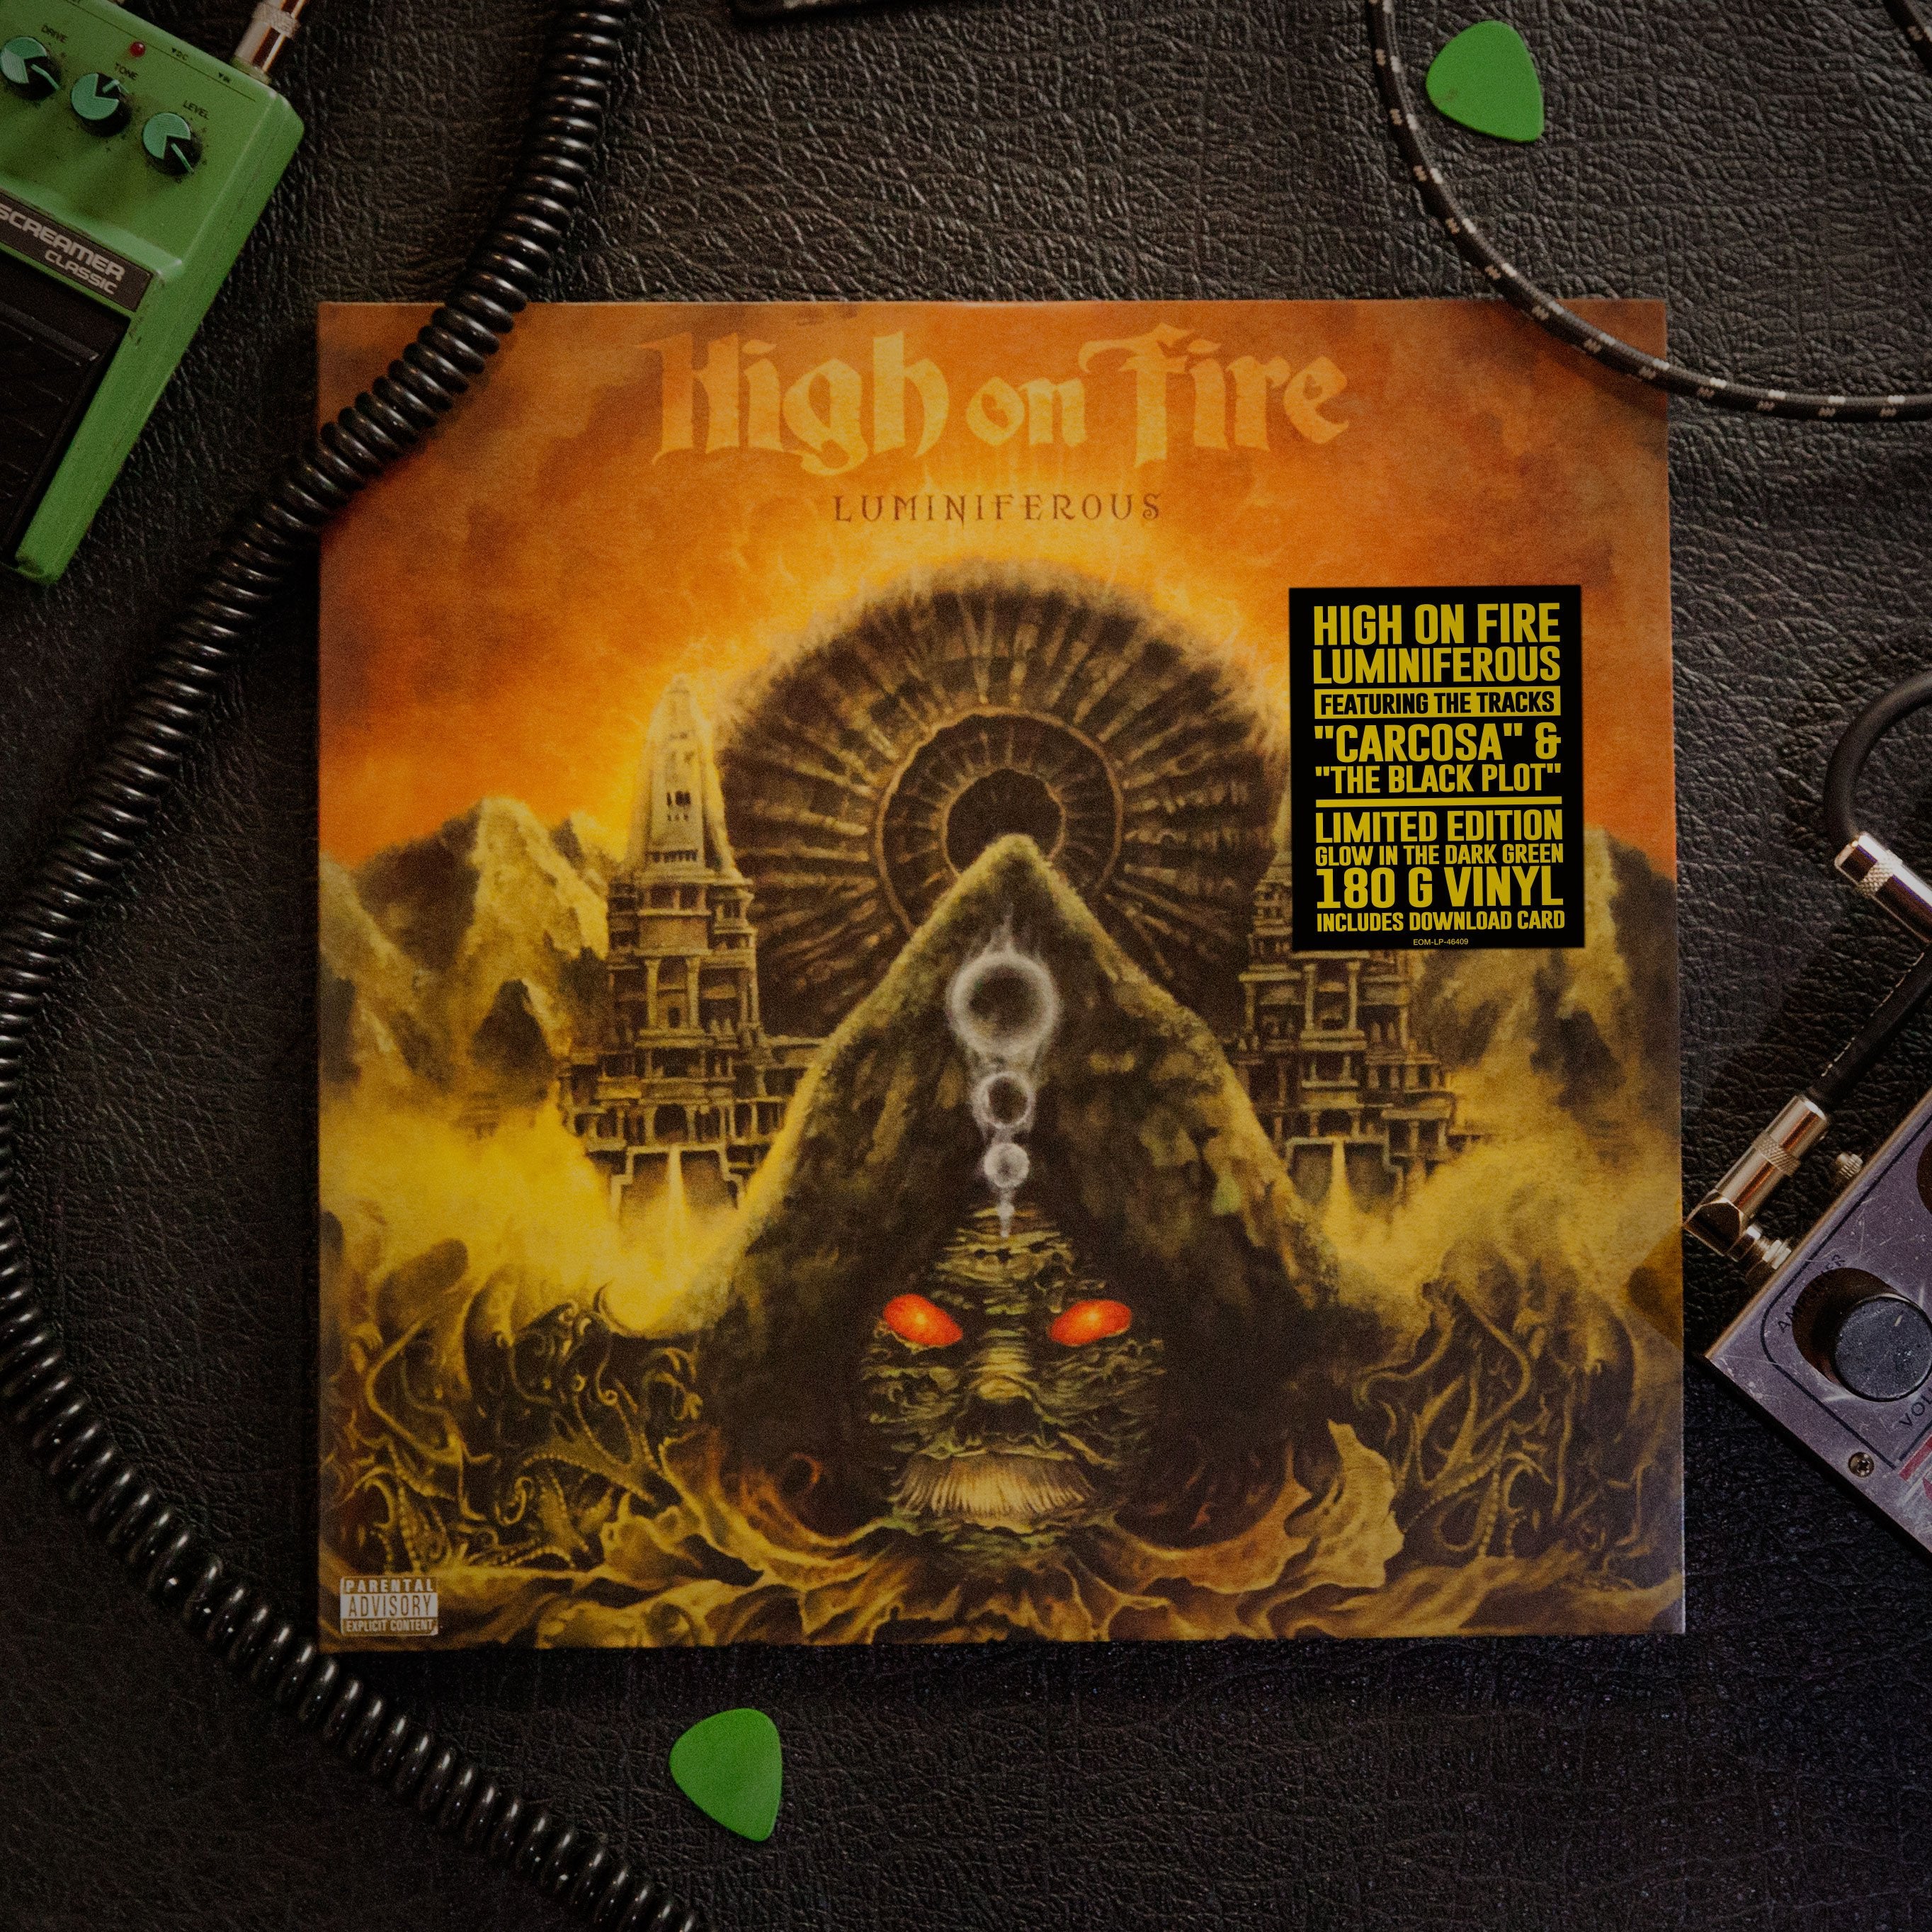 High On Fire - Luminiferous "Glow In The Dark Green" Vinyl